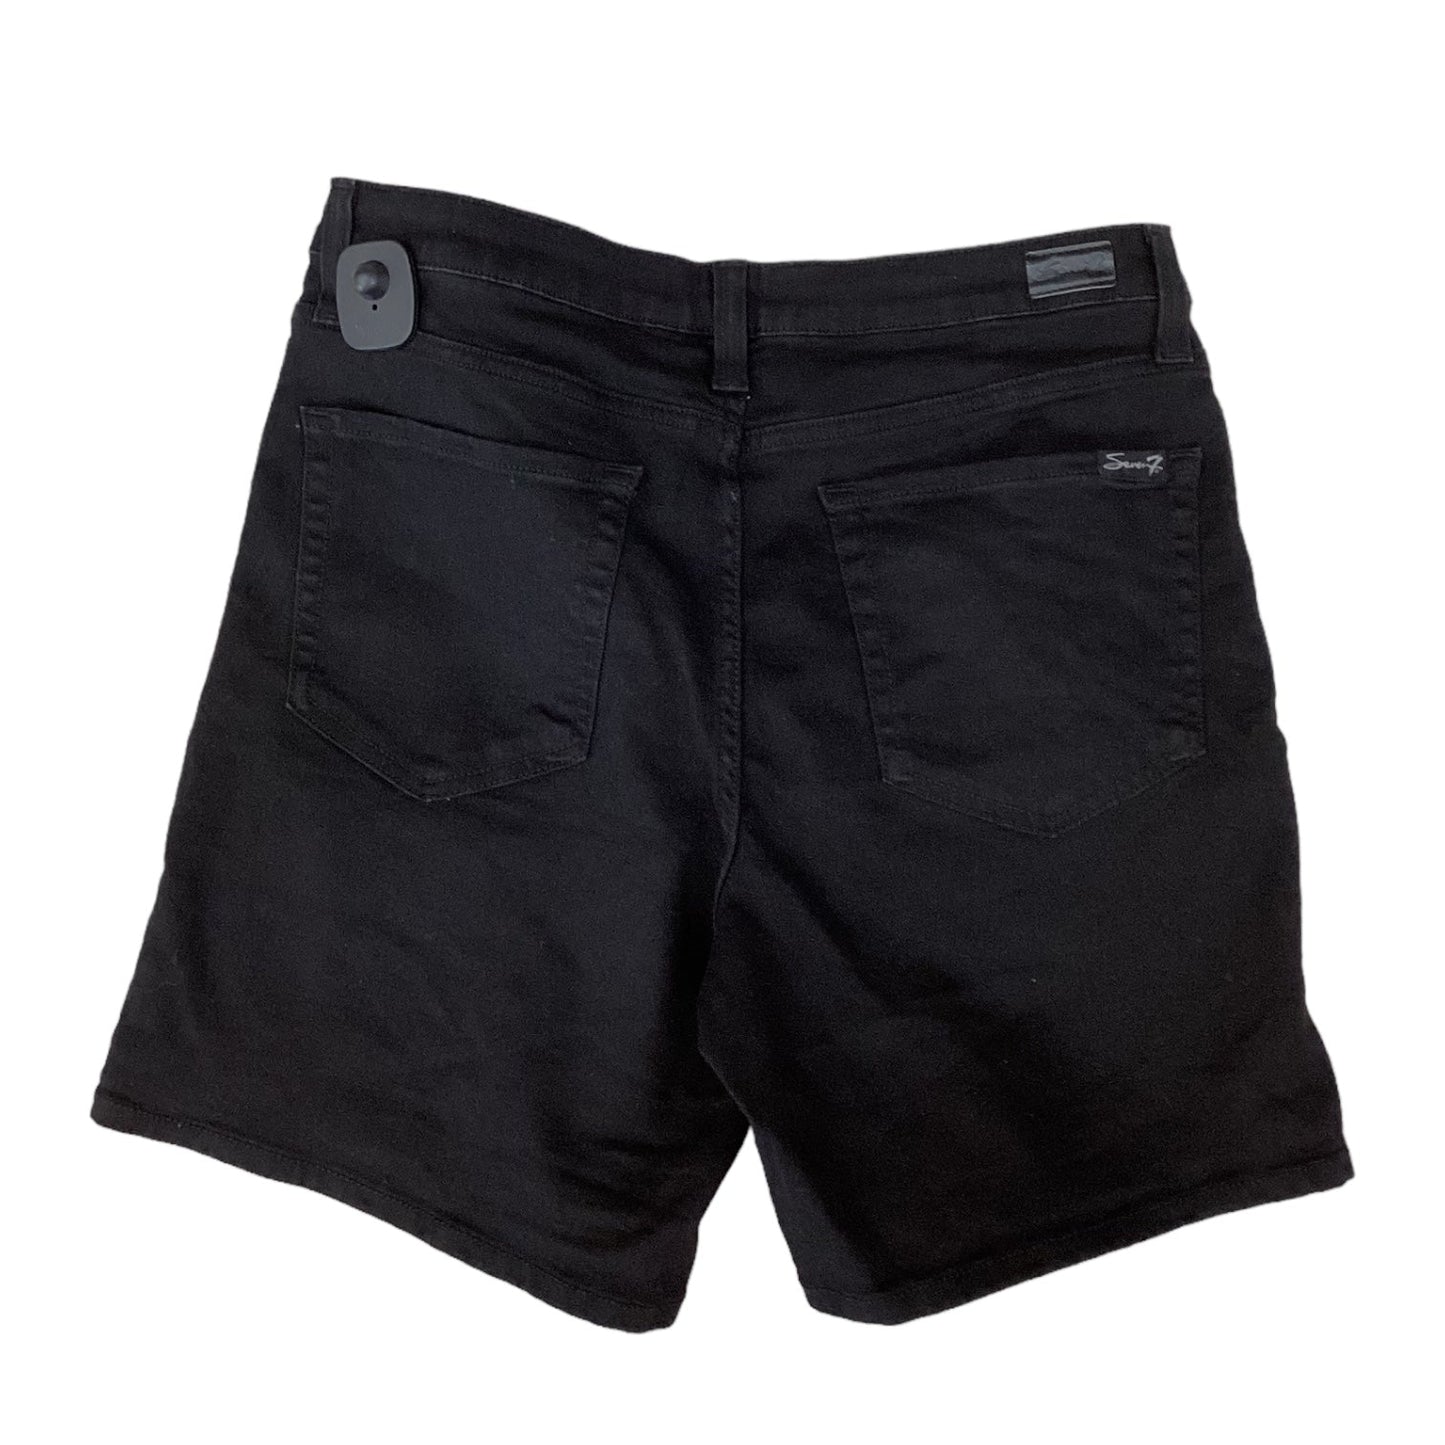 Black Shorts Seven 7, Size 12